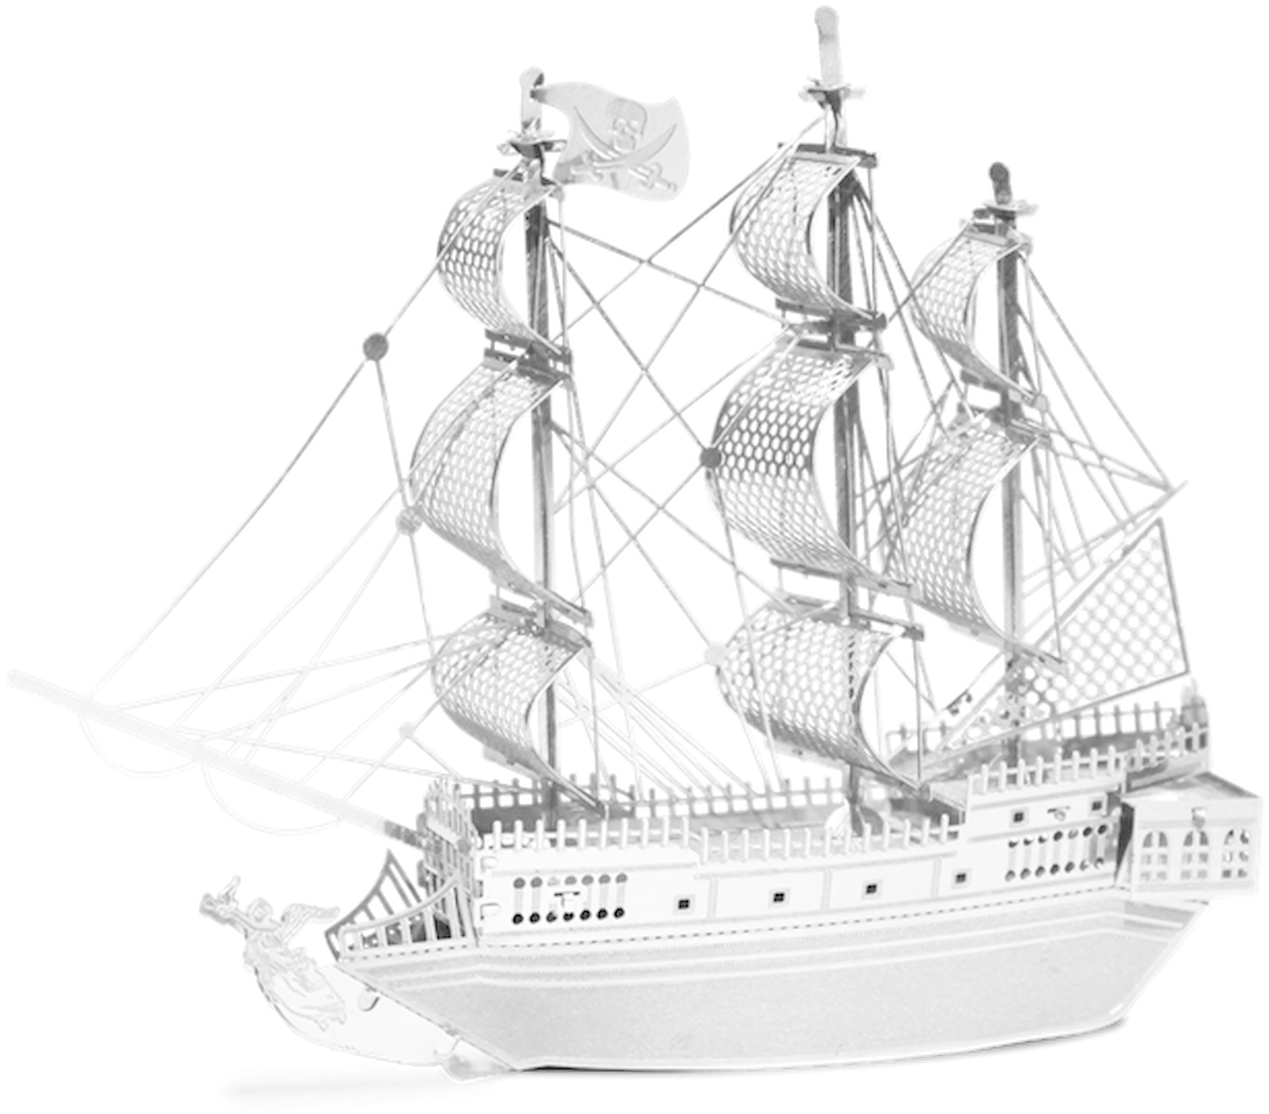 A White Model Of A Ship